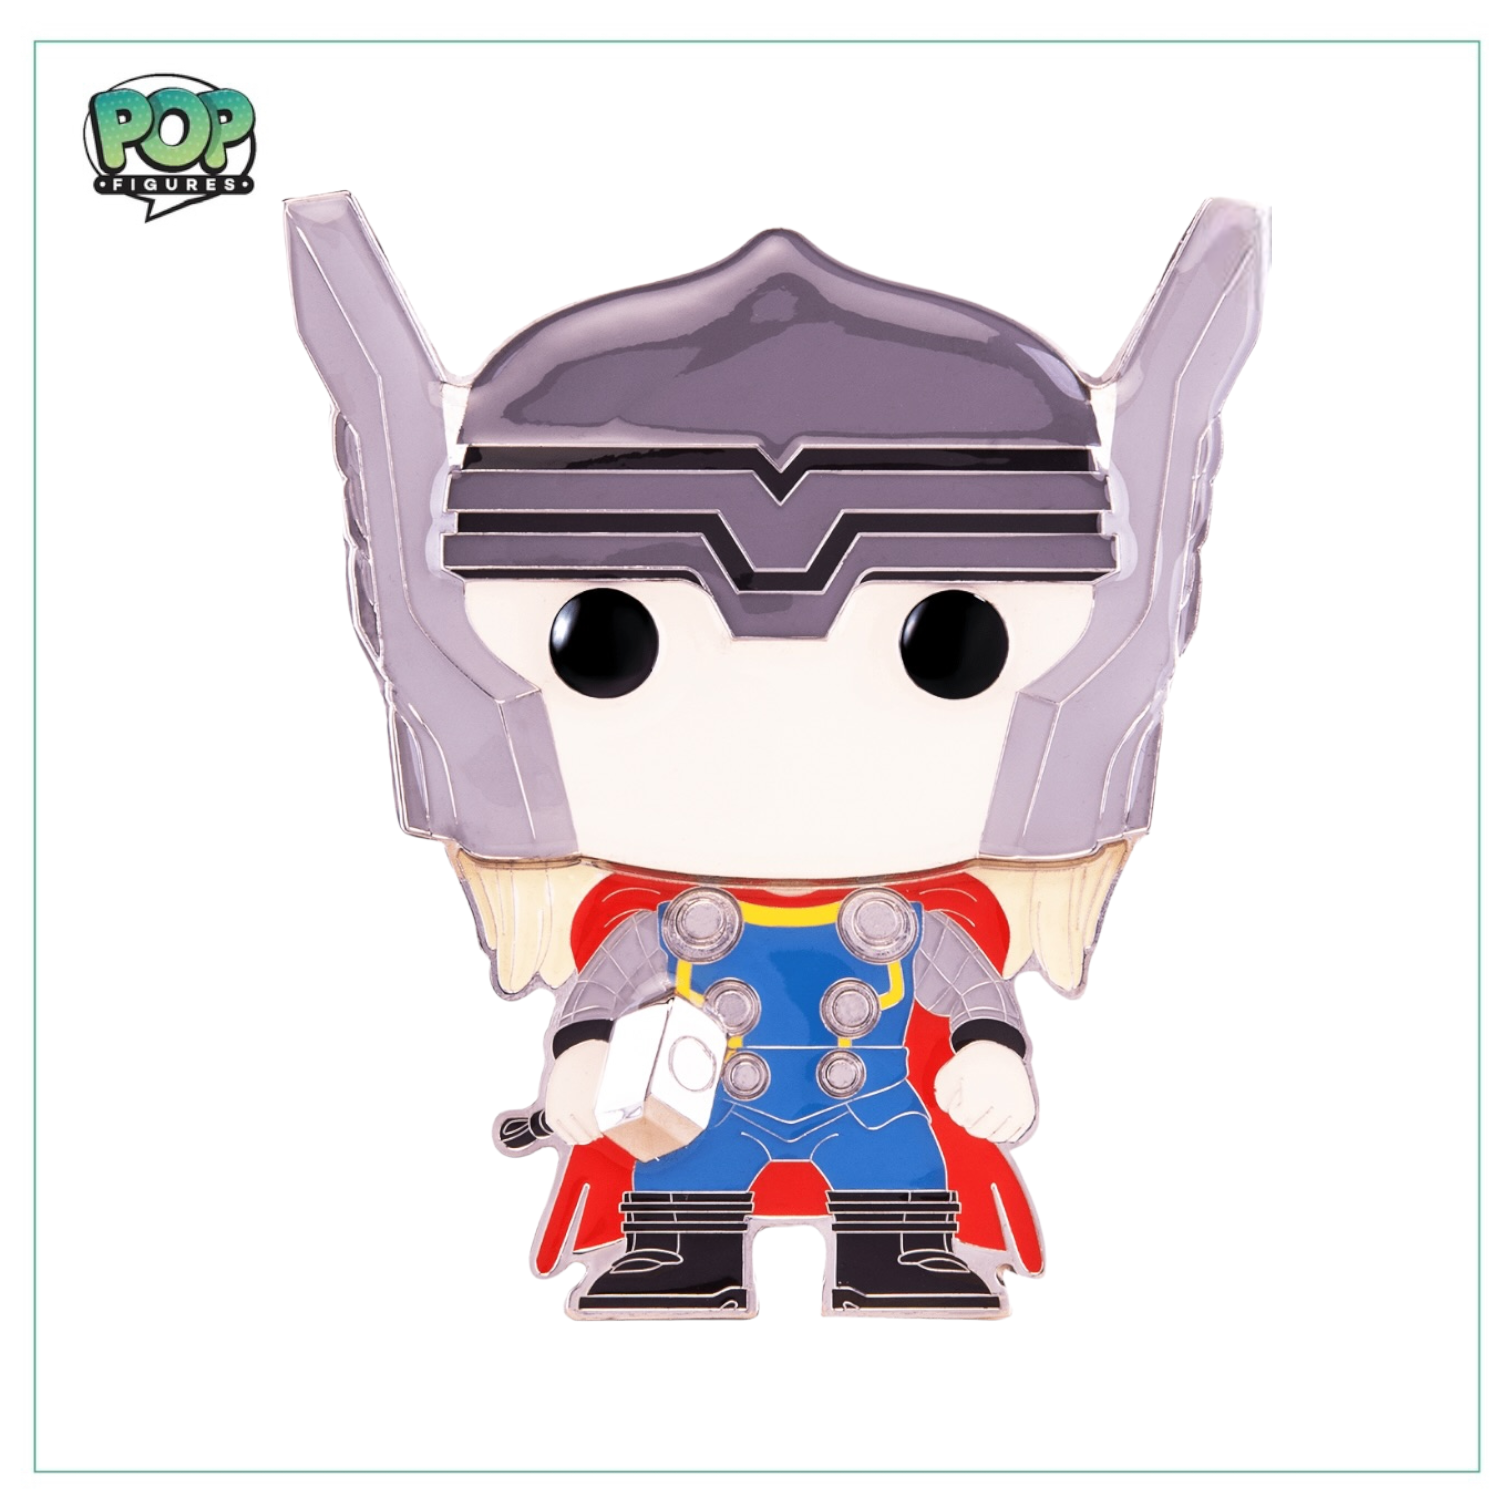 Thor #03 Funko Enamel Pin! Marvel